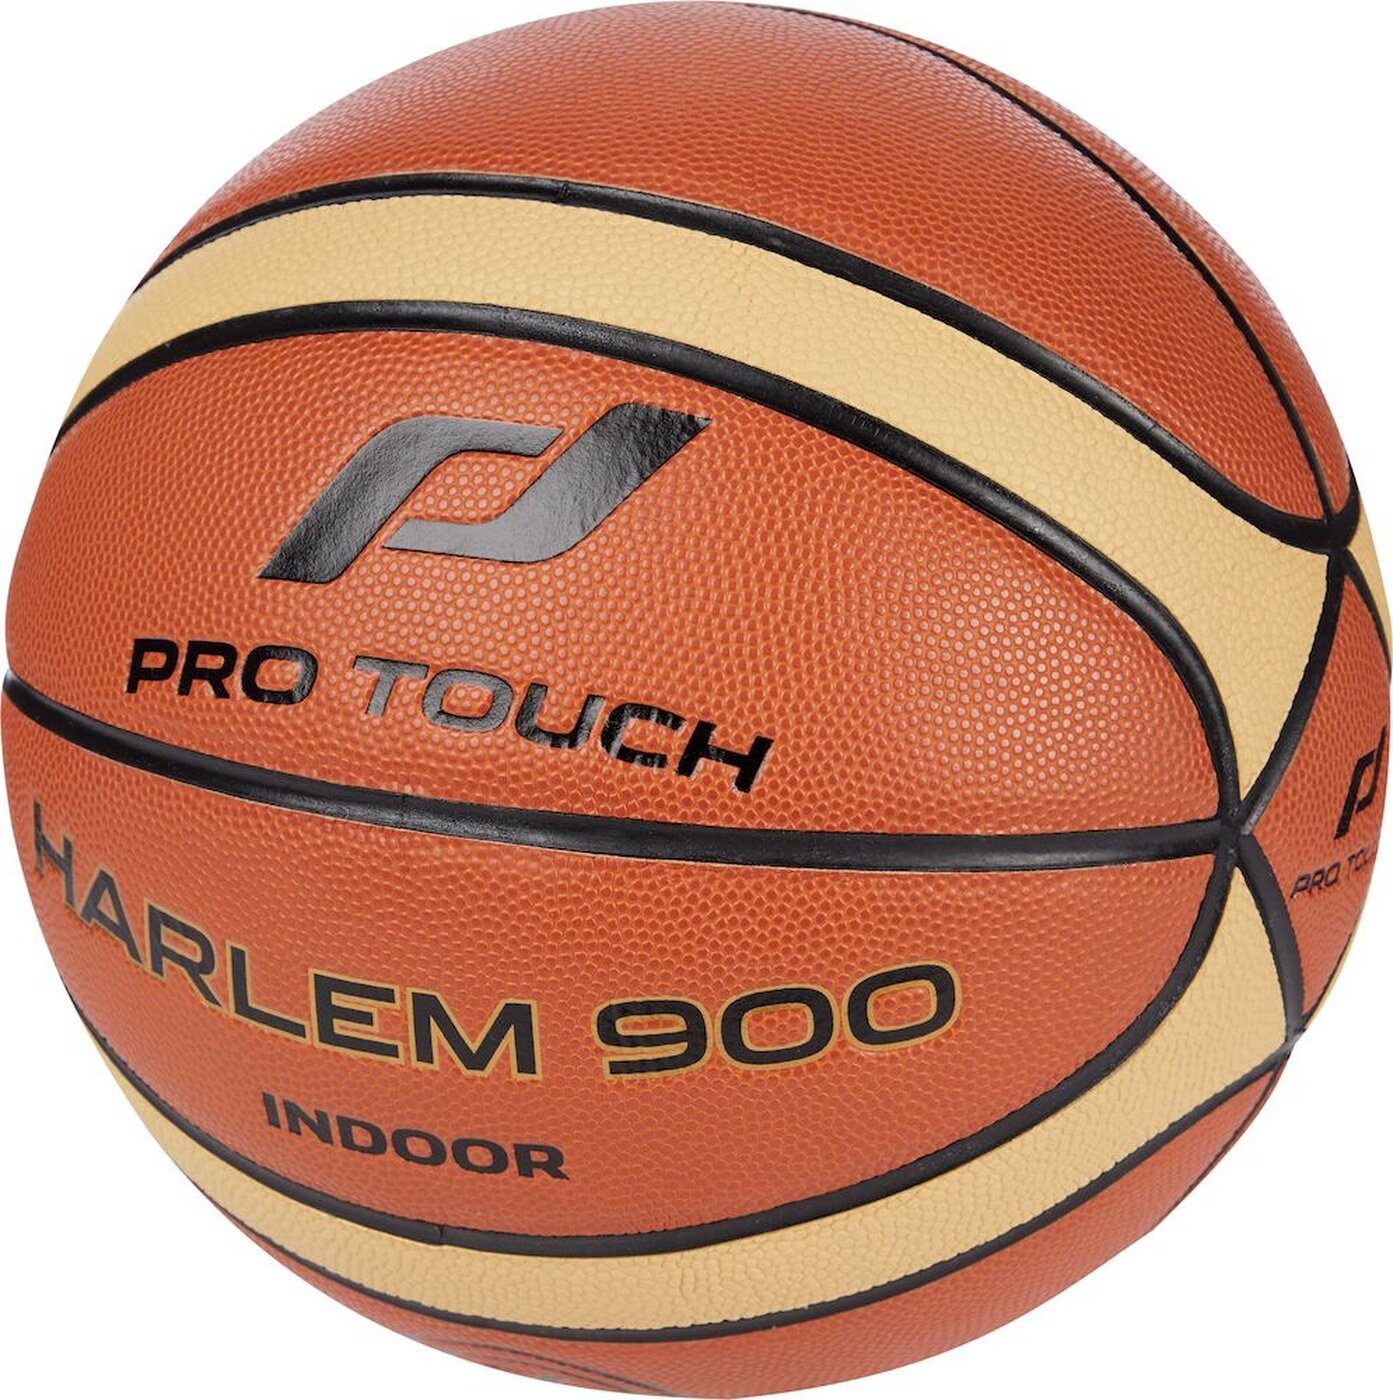 Pro Basketball Basketball Harlem 900 Touch BROWN/BEIGE/BLACK/GO